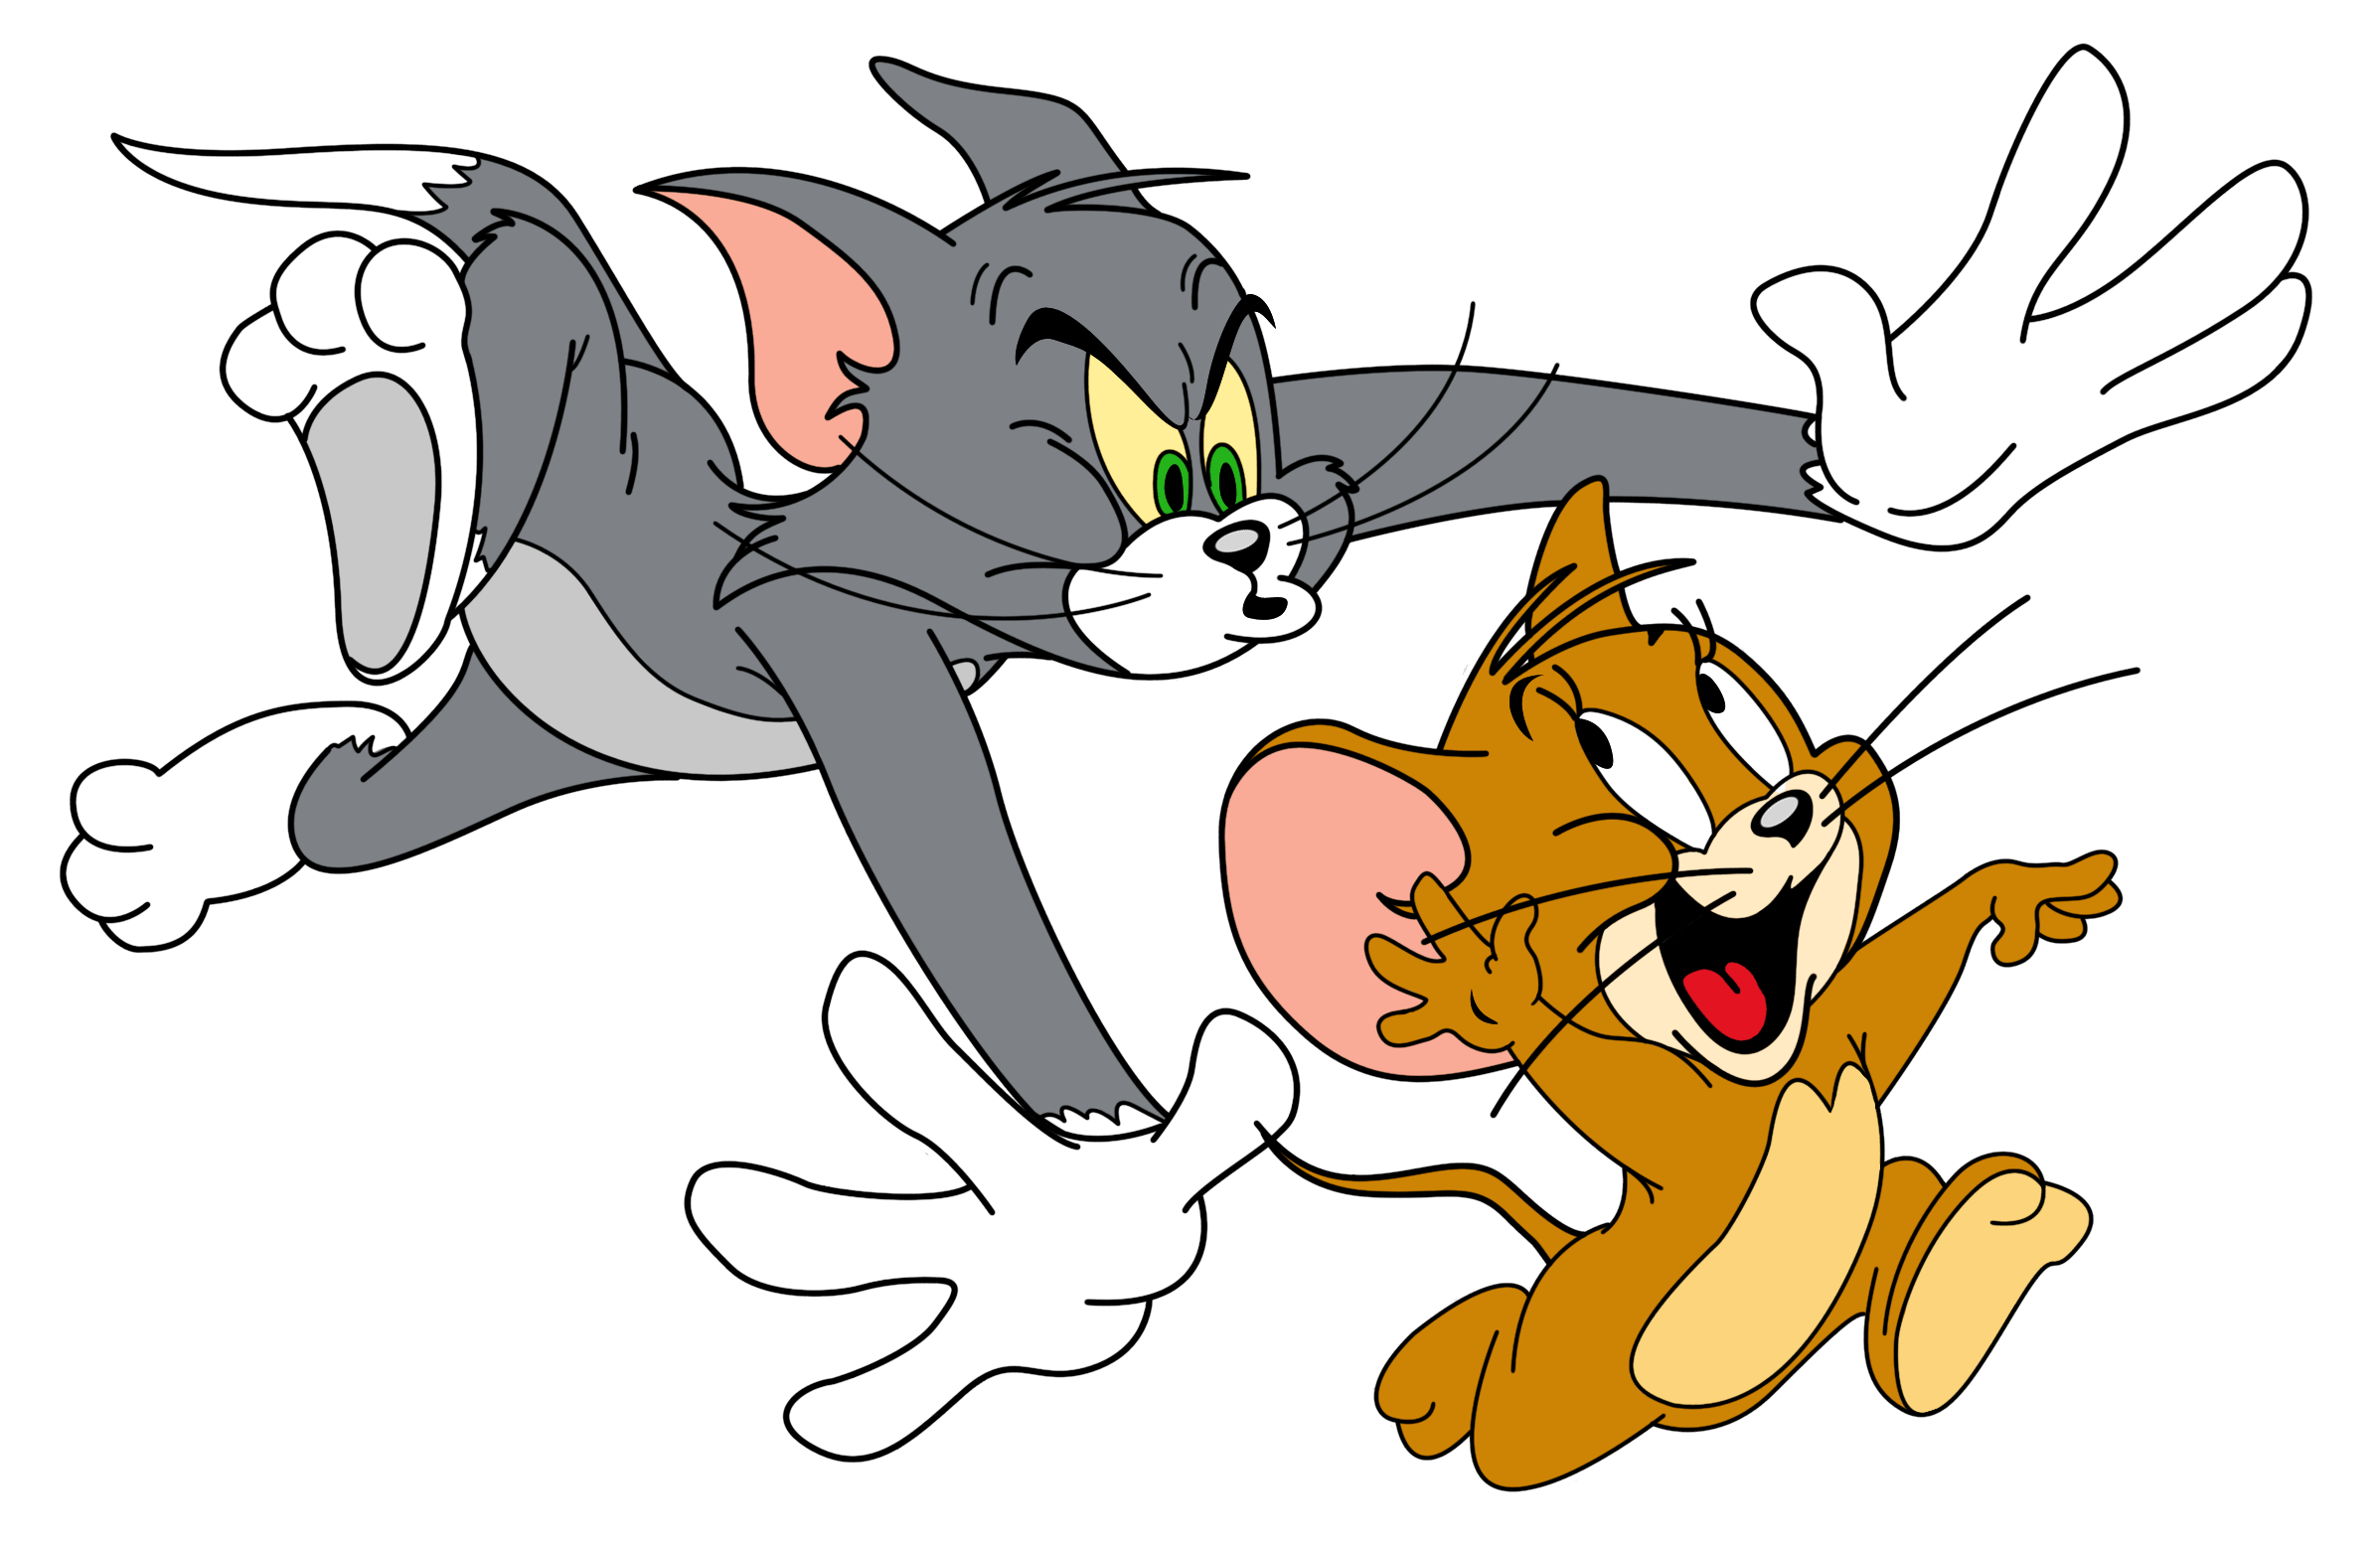 Tom and Jerry. Том и Джерри (Tom and Jerry) 1940. Tom and Jerry cartoon. Том и Джерри 1997. Три джерри